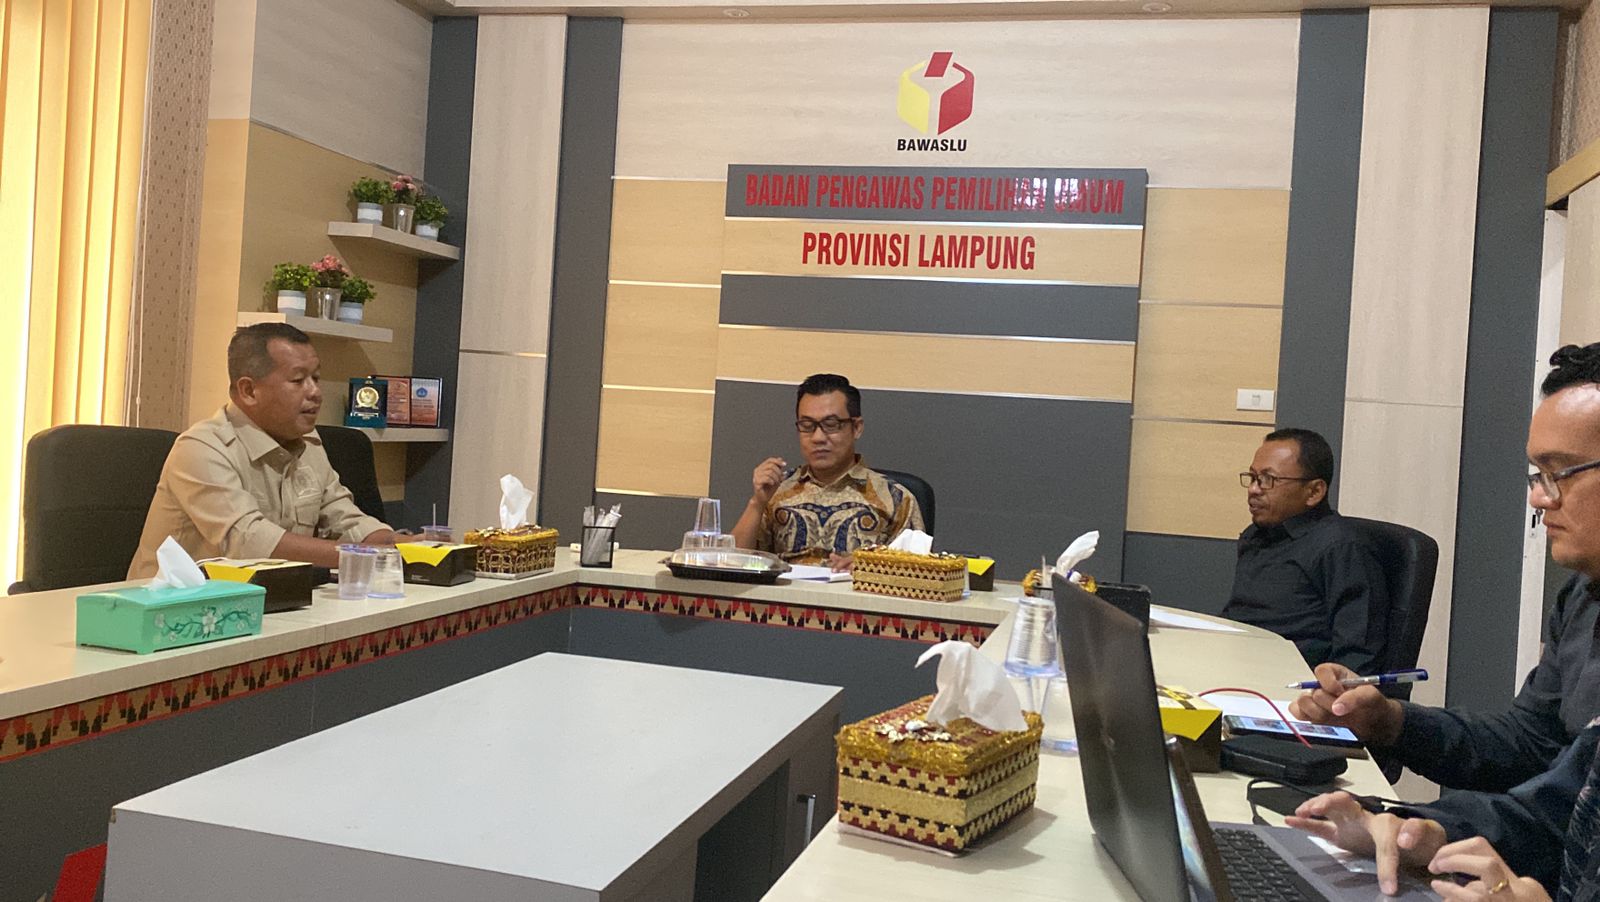 Terkait Hadiah Mobil Jalan Sehat, Ketua Golkar Kota Bandar Lampung Penuhi Panggilan Bawaslu 